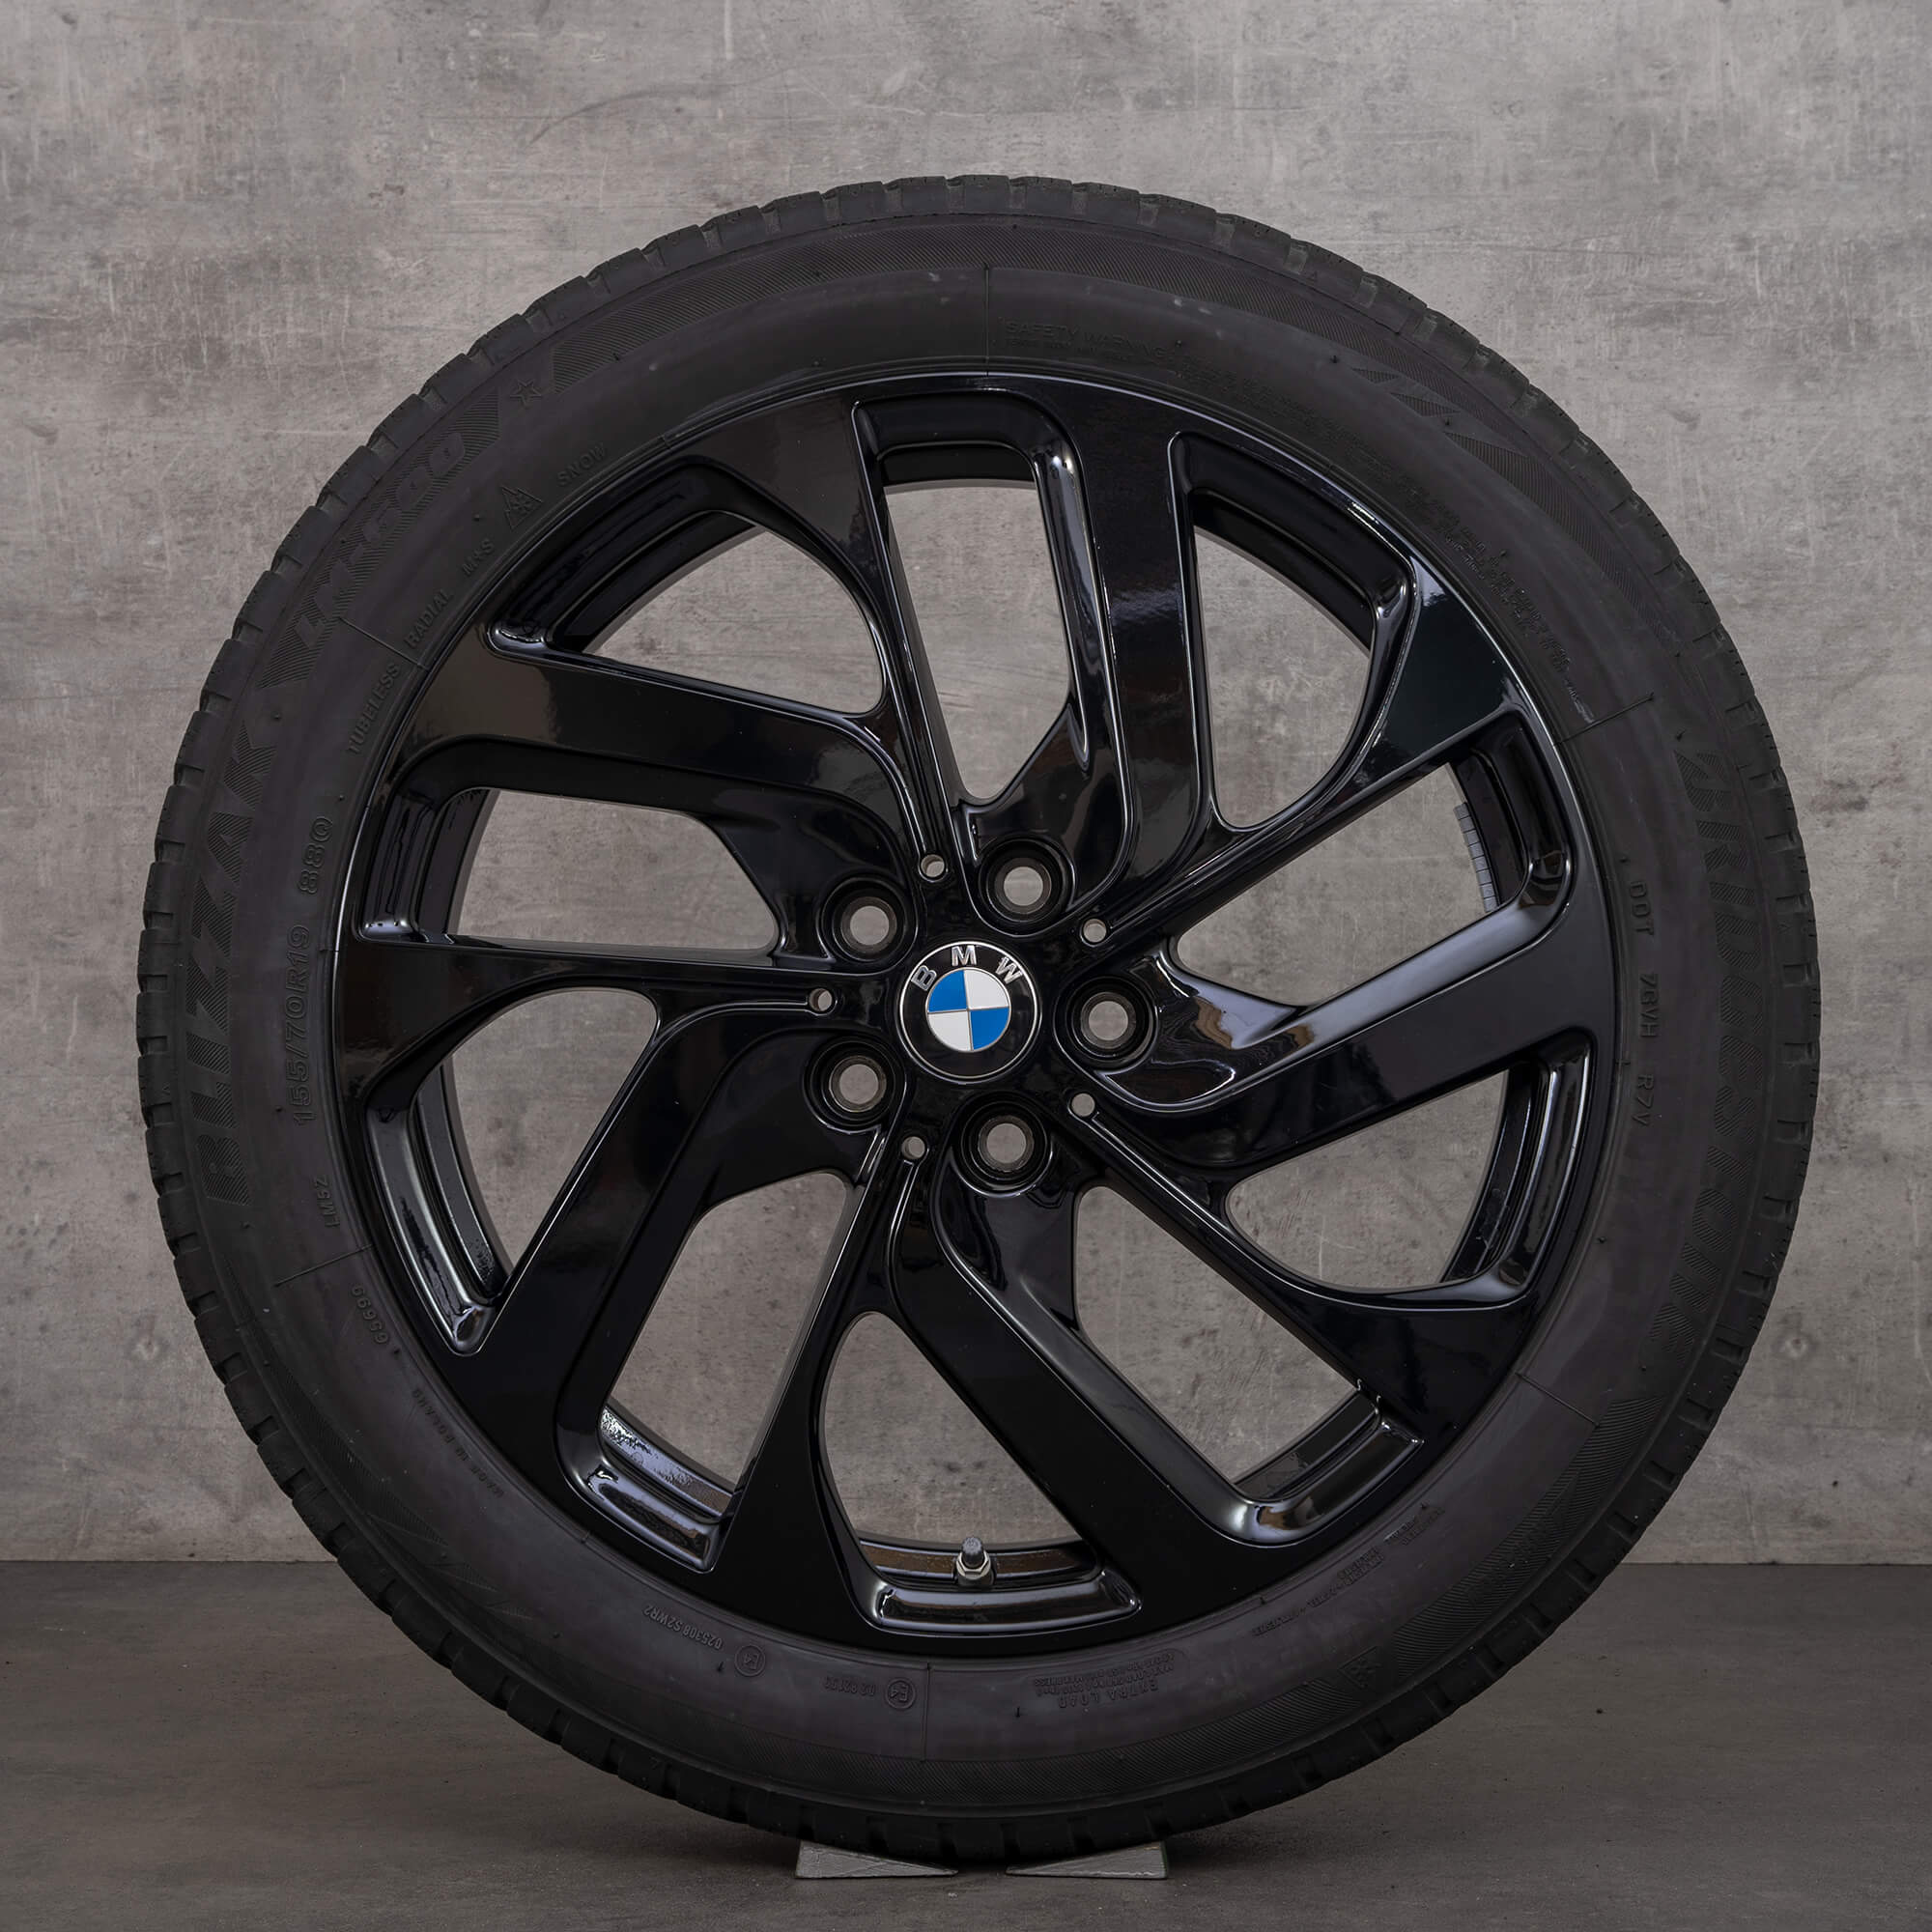 BMW i3s I01 winter tires turbine styling 428 19 inch rims 6887937 wheels